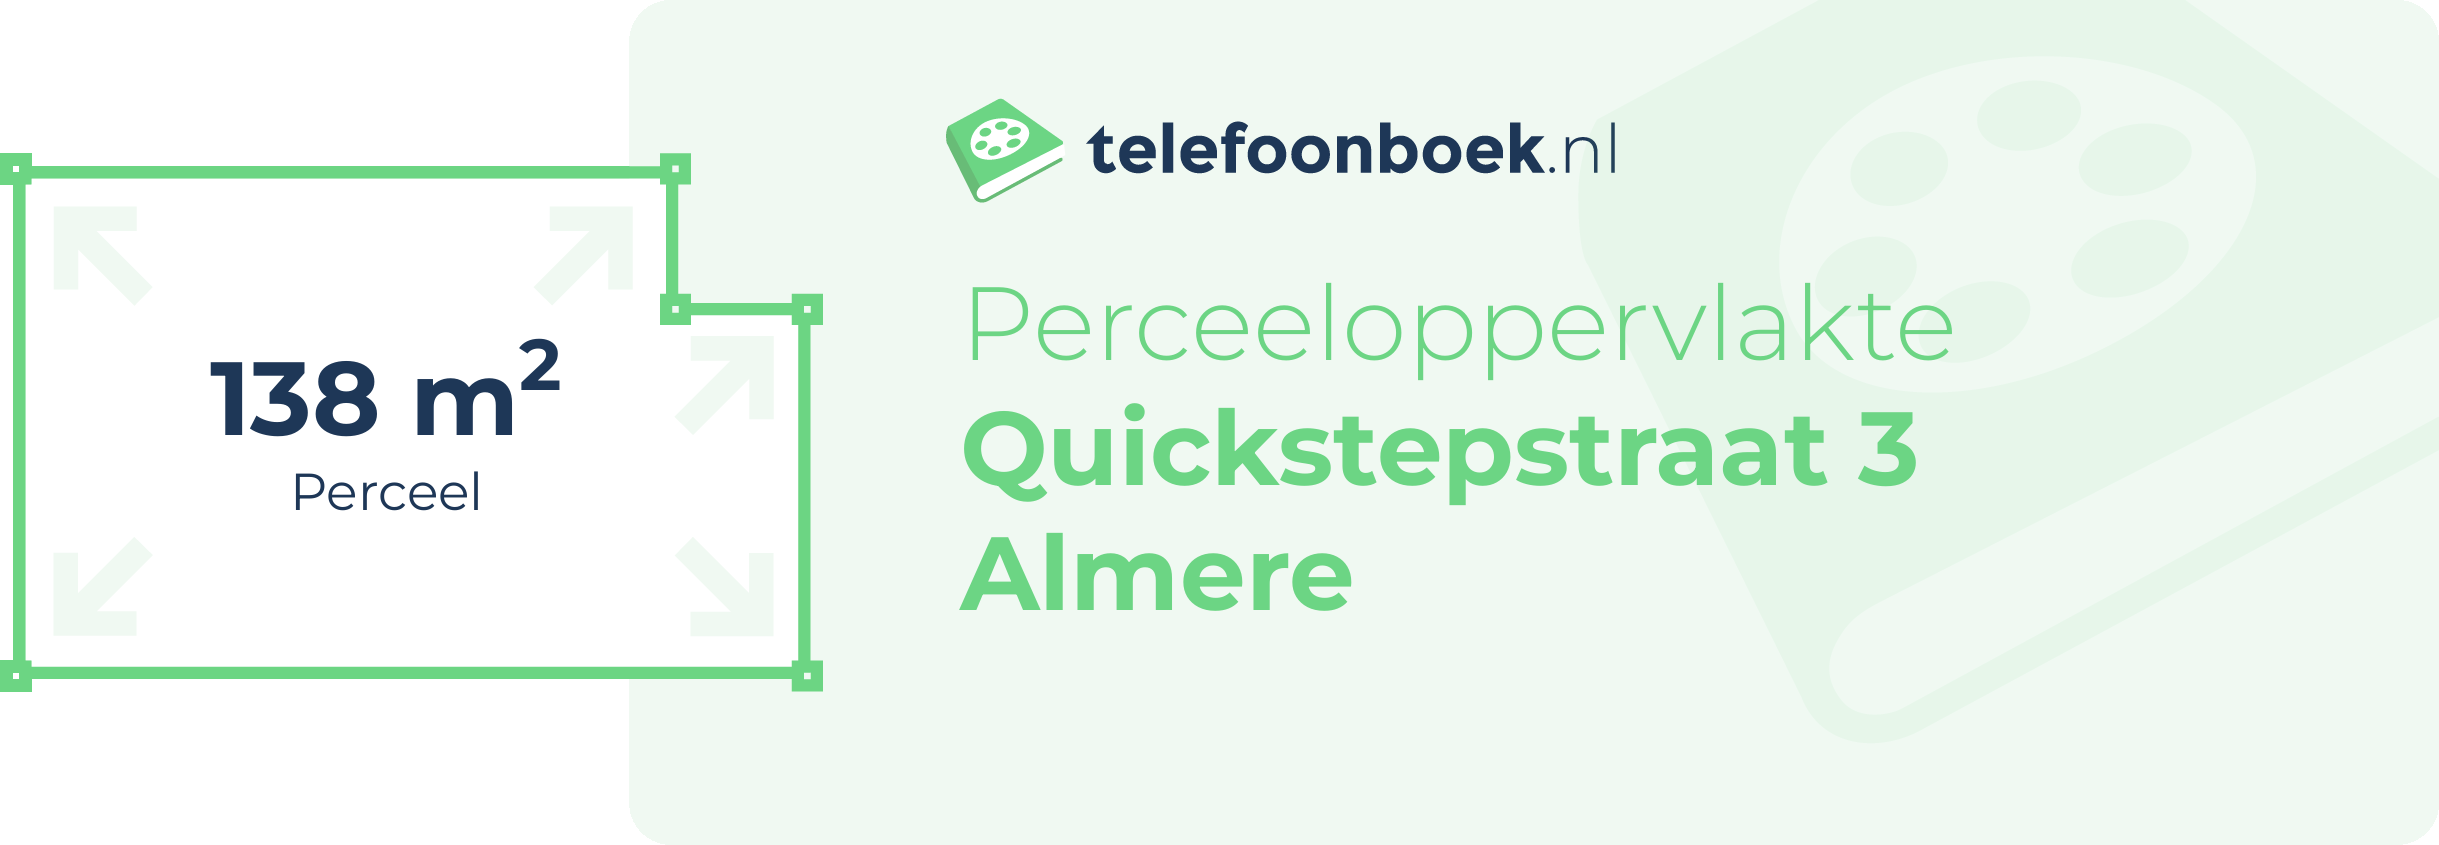 Perceeloppervlakte Quickstepstraat 3 Almere